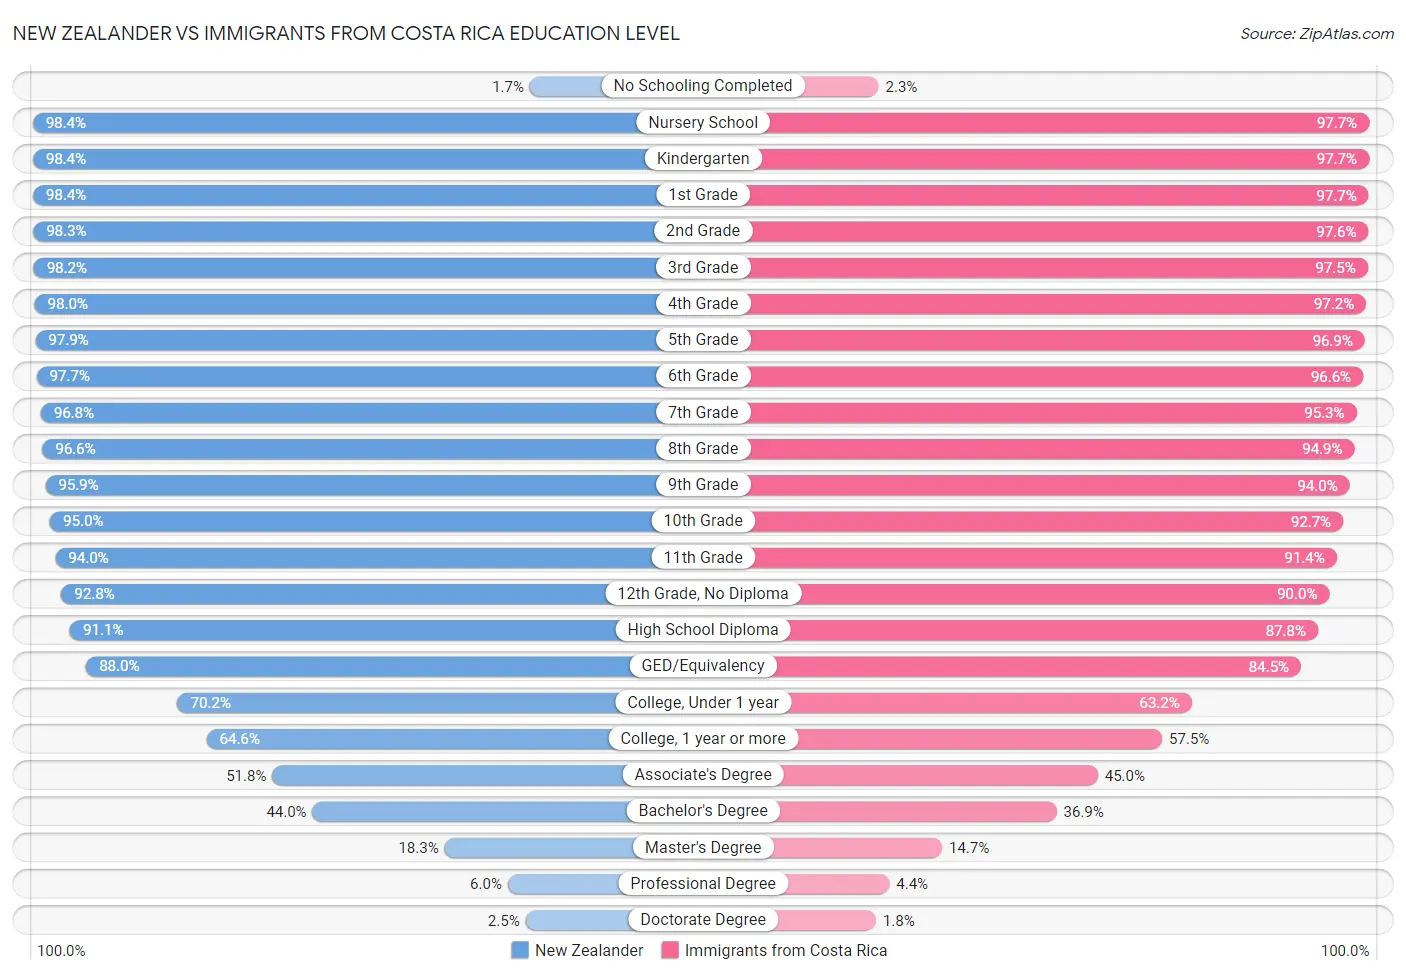 New Zealander vs Immigrants from Costa Rica Education Level